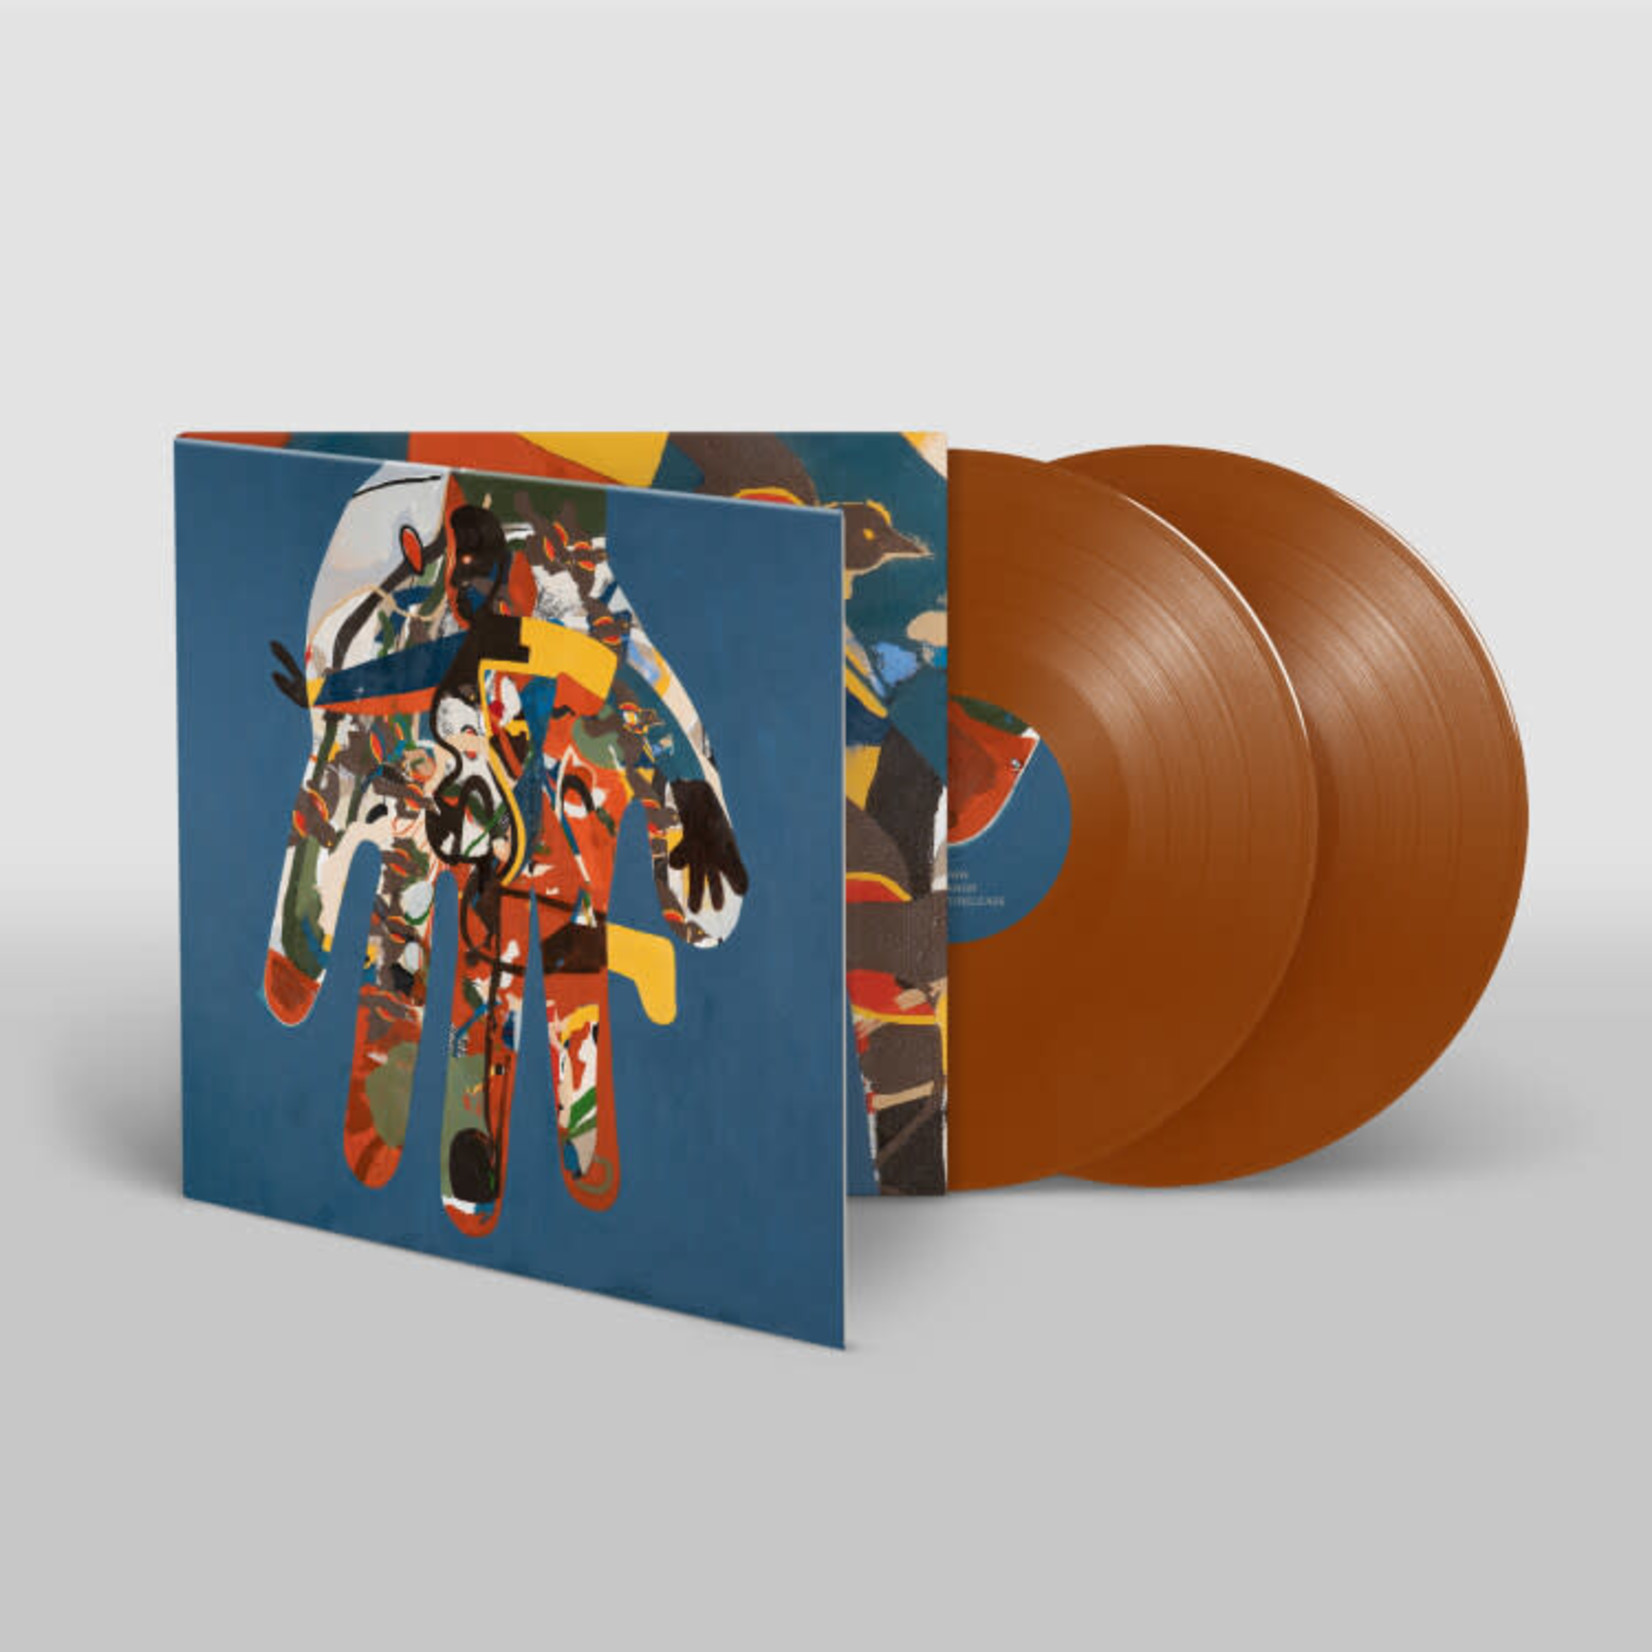 [New] Hot Chip - Freakout/Release (2LP, indie exclusive, brown vinyl)